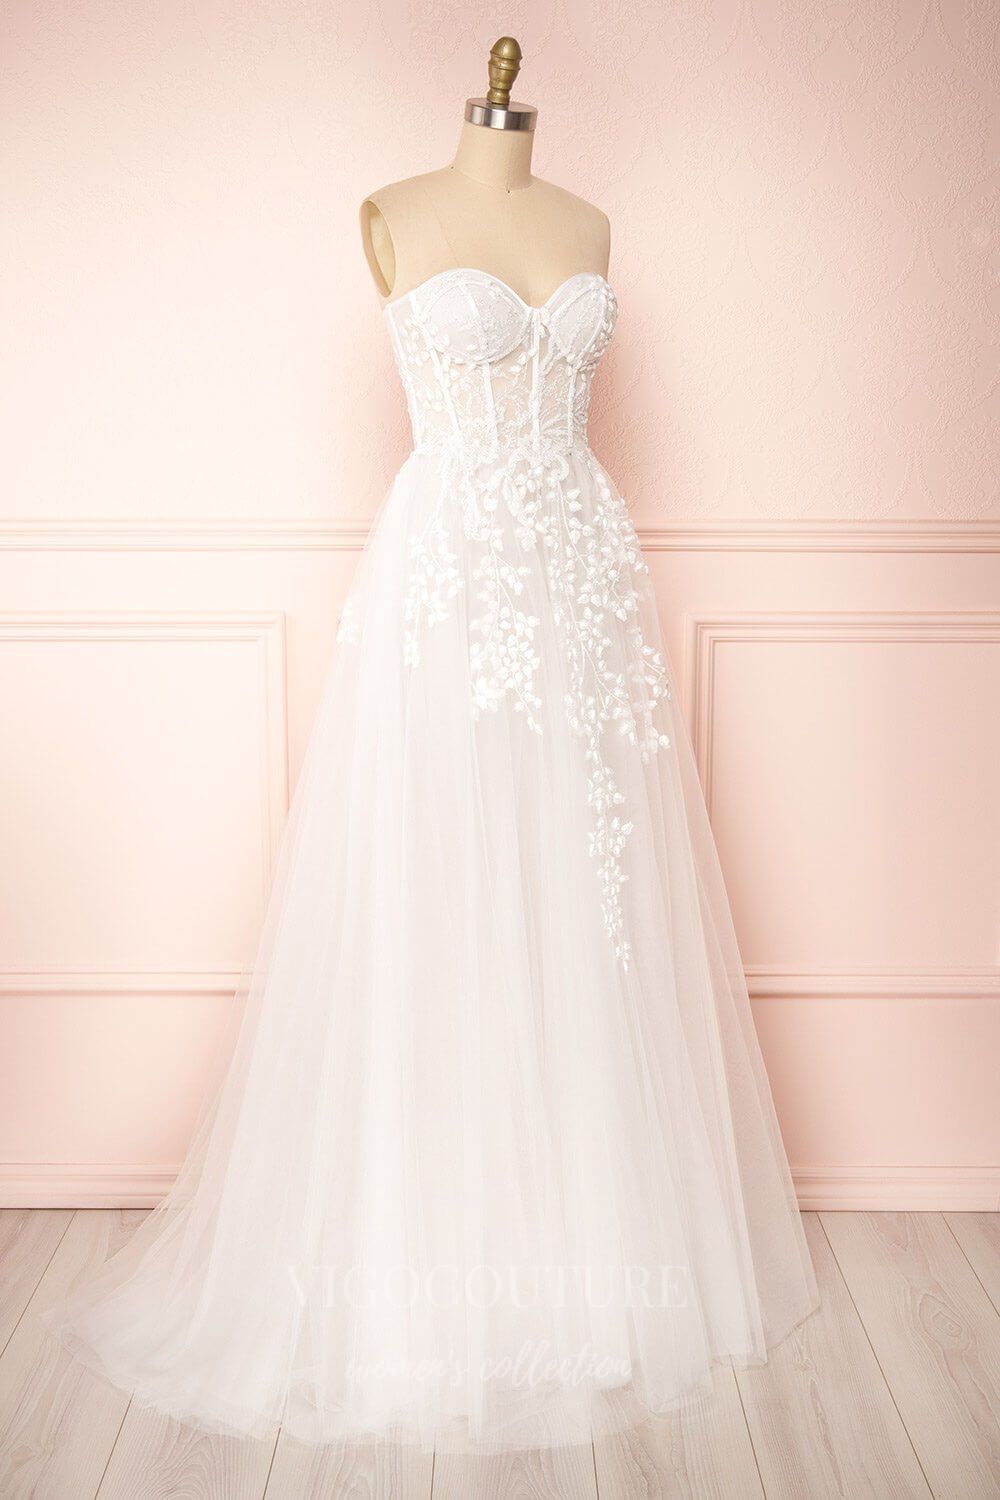 vigocouture-Ivory Strapless Lace Applique Wedding Dresses w0008-Wedding Dresses-vigocouture-Ivory-US2-